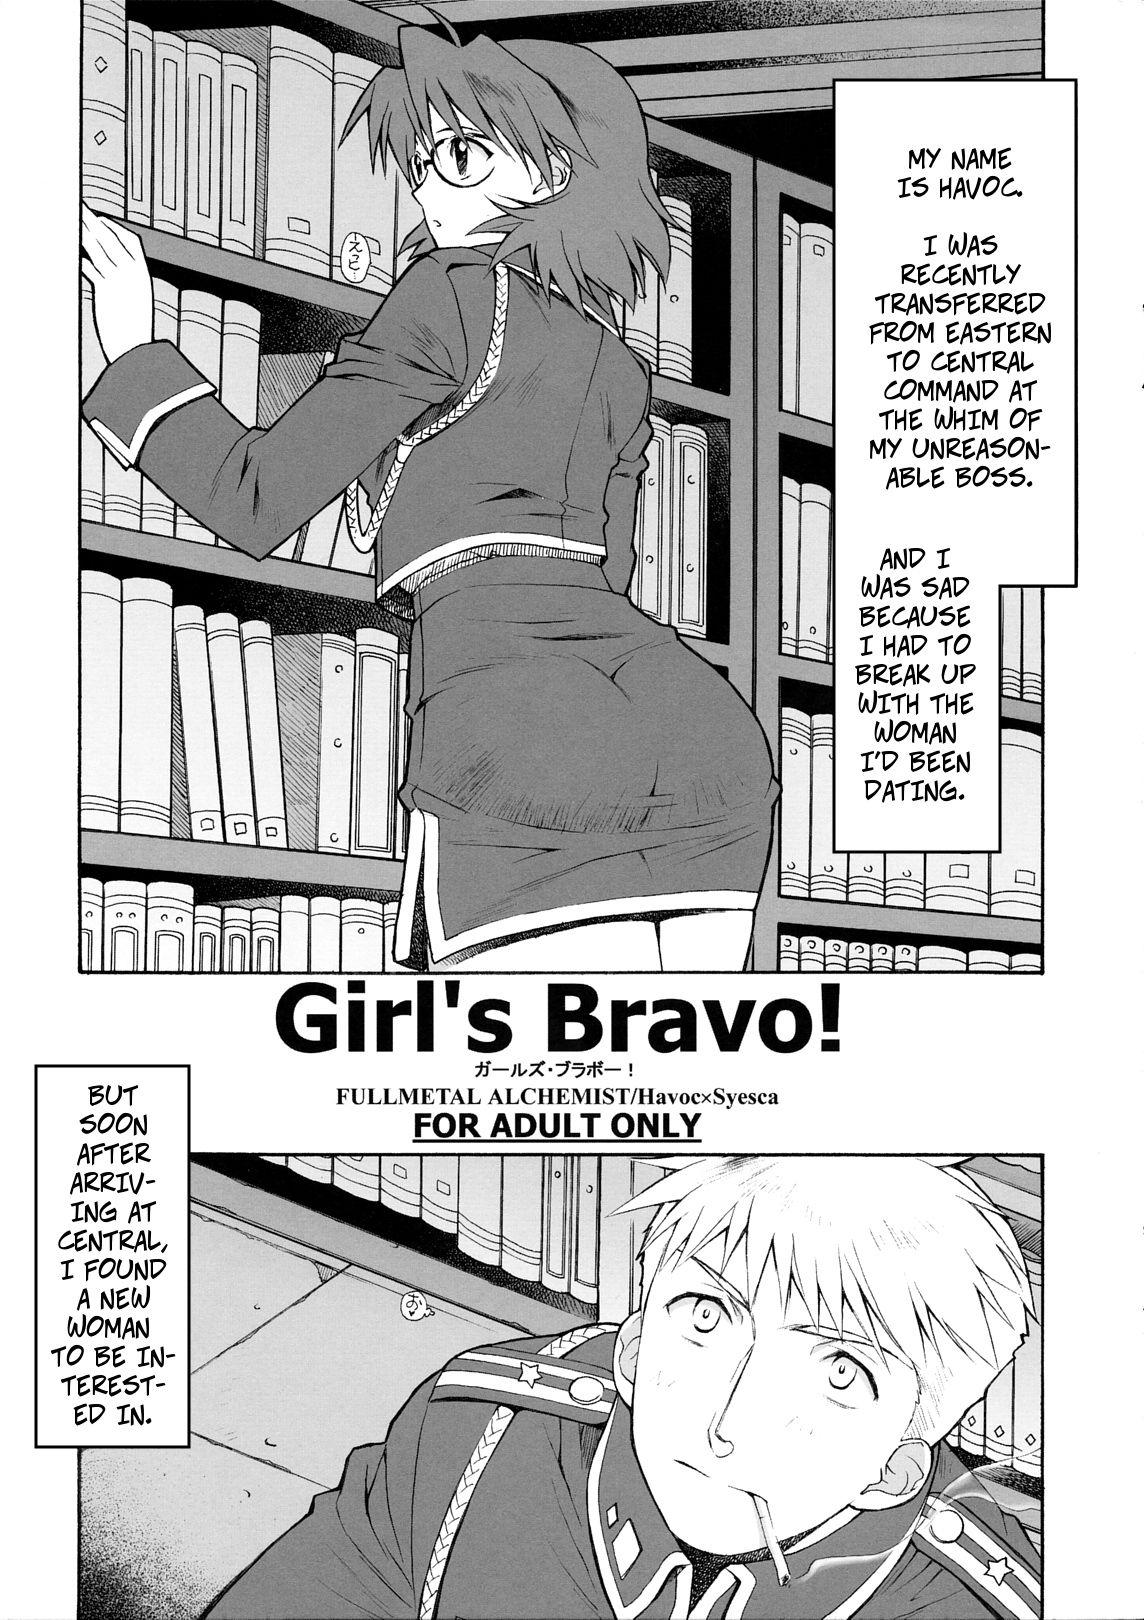 Home Girl's Bravo! - Fullmetal alchemist Ametuer Porn - Page 1